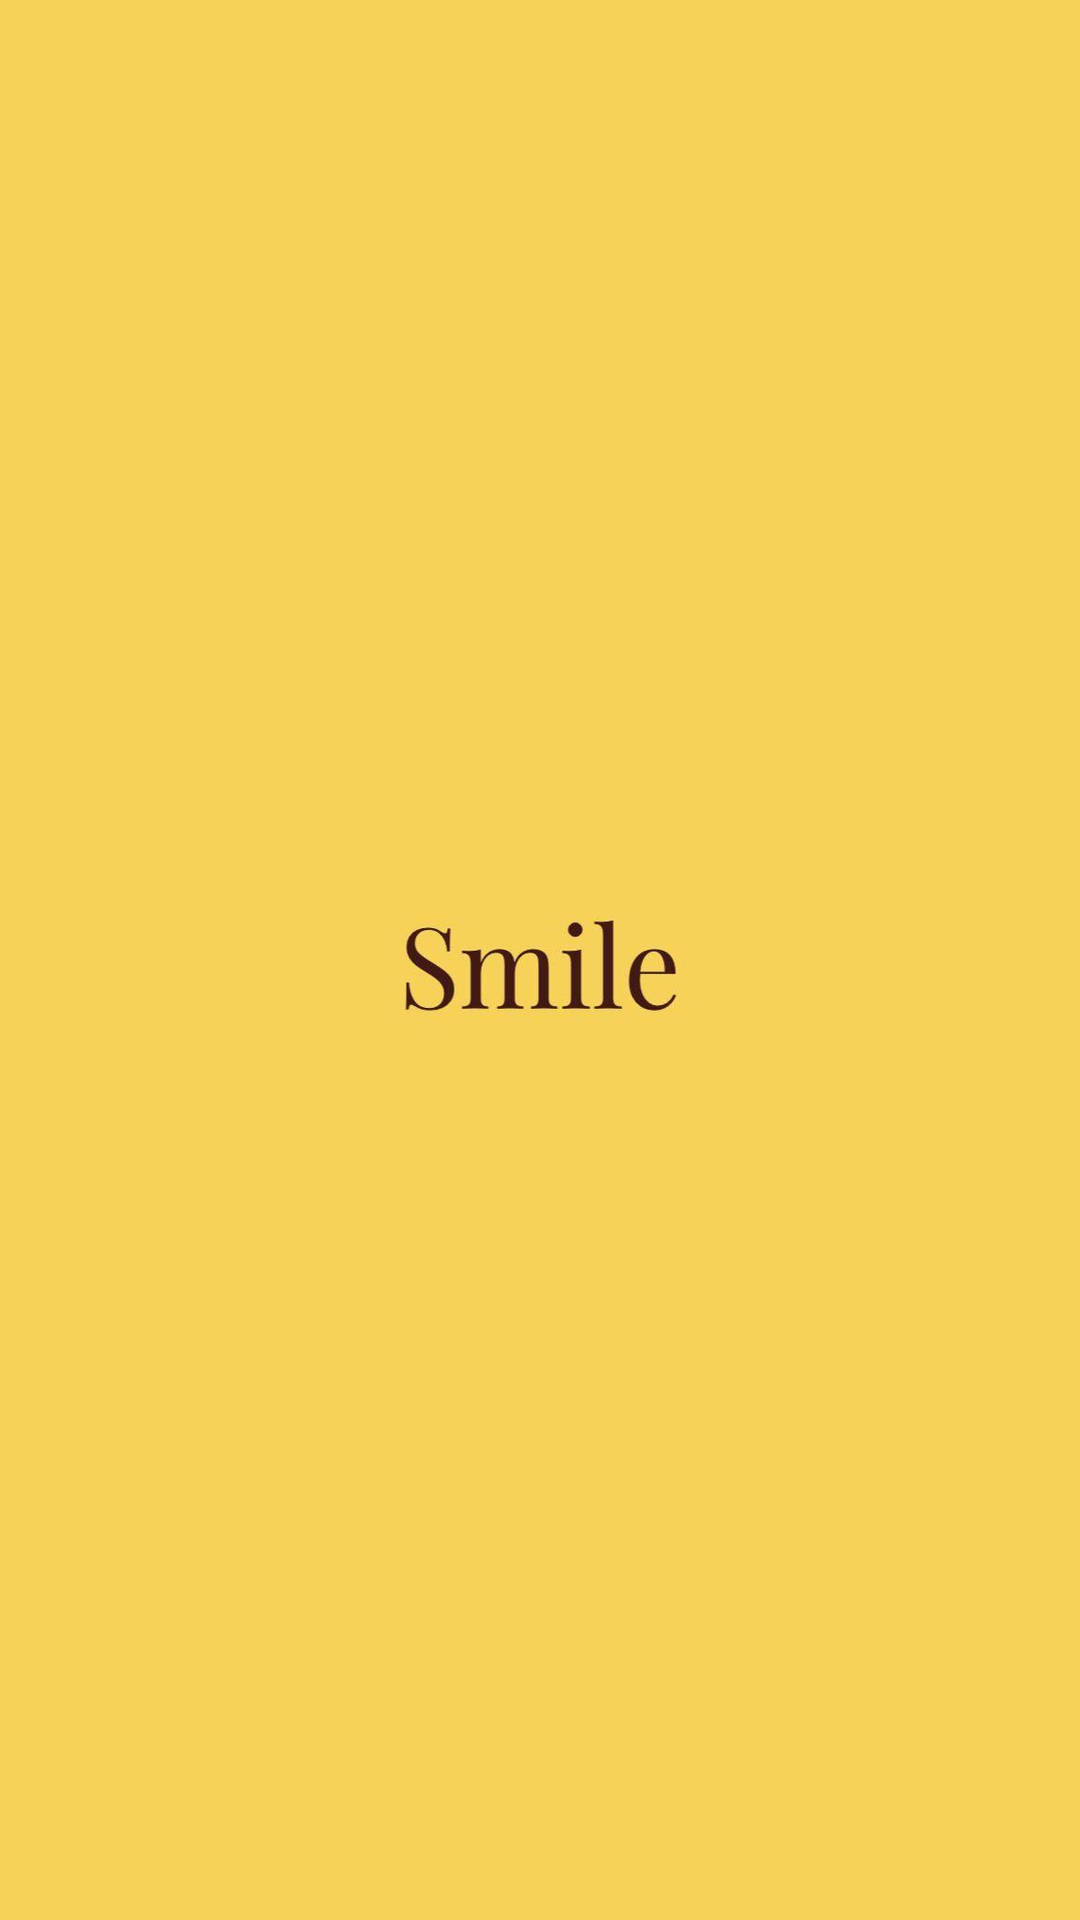 Simple Smile Plain Yellow Phone